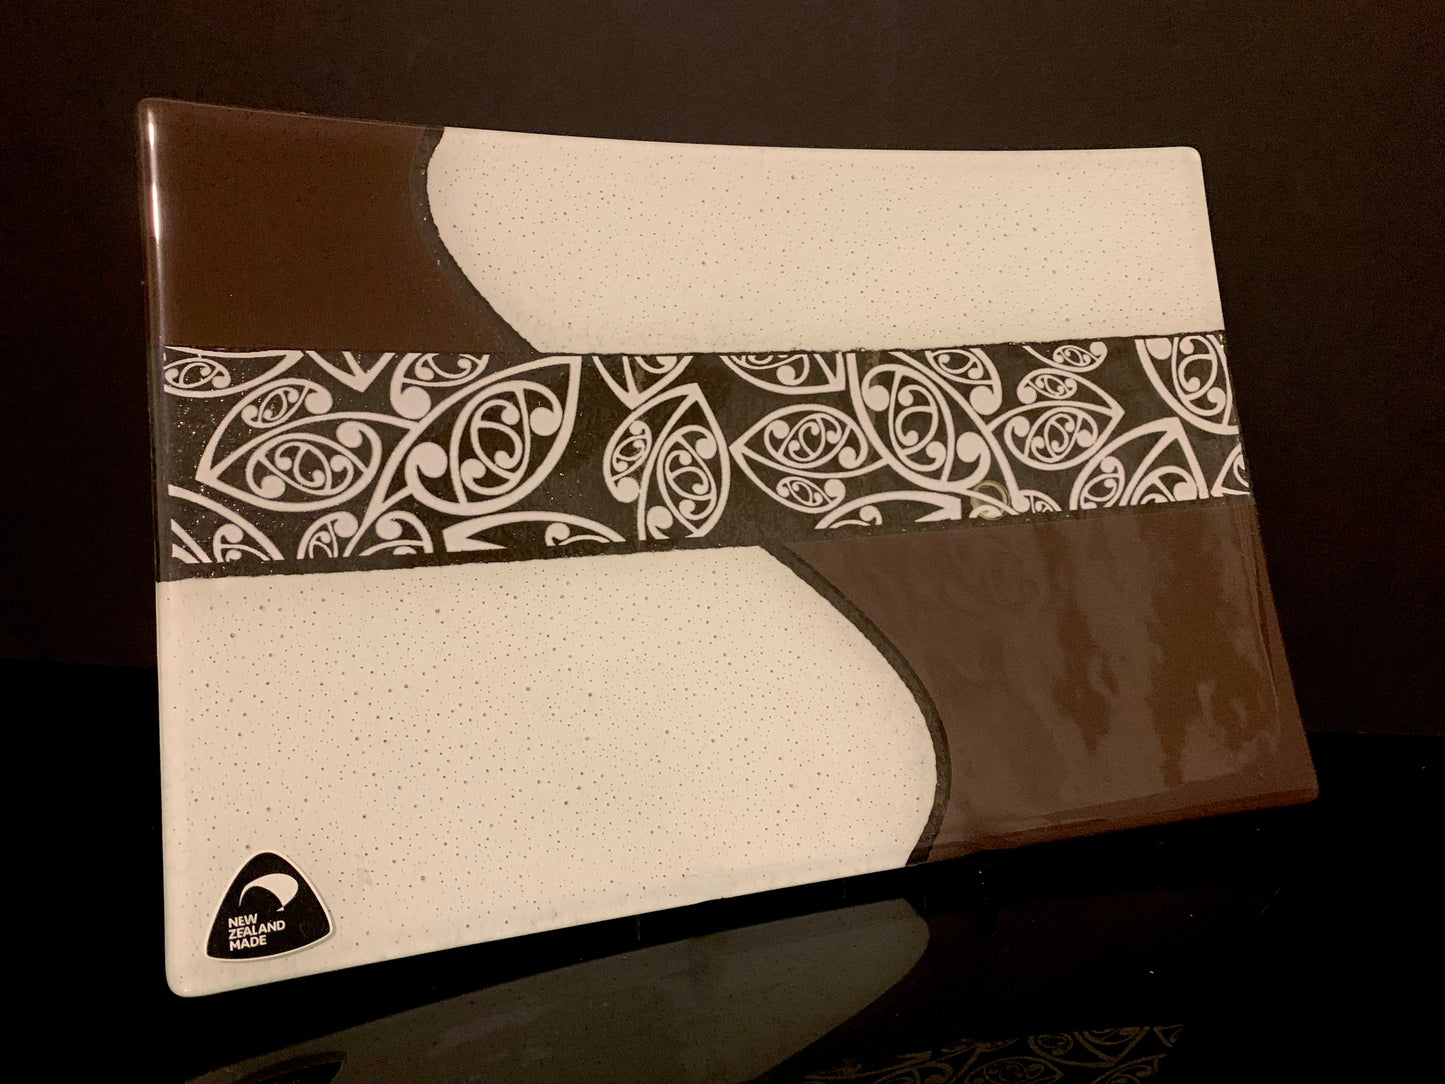 Fused Glass Platter by Maori Boy - Kowhaiwhai Design (Brown and White) 30cm x 20cm